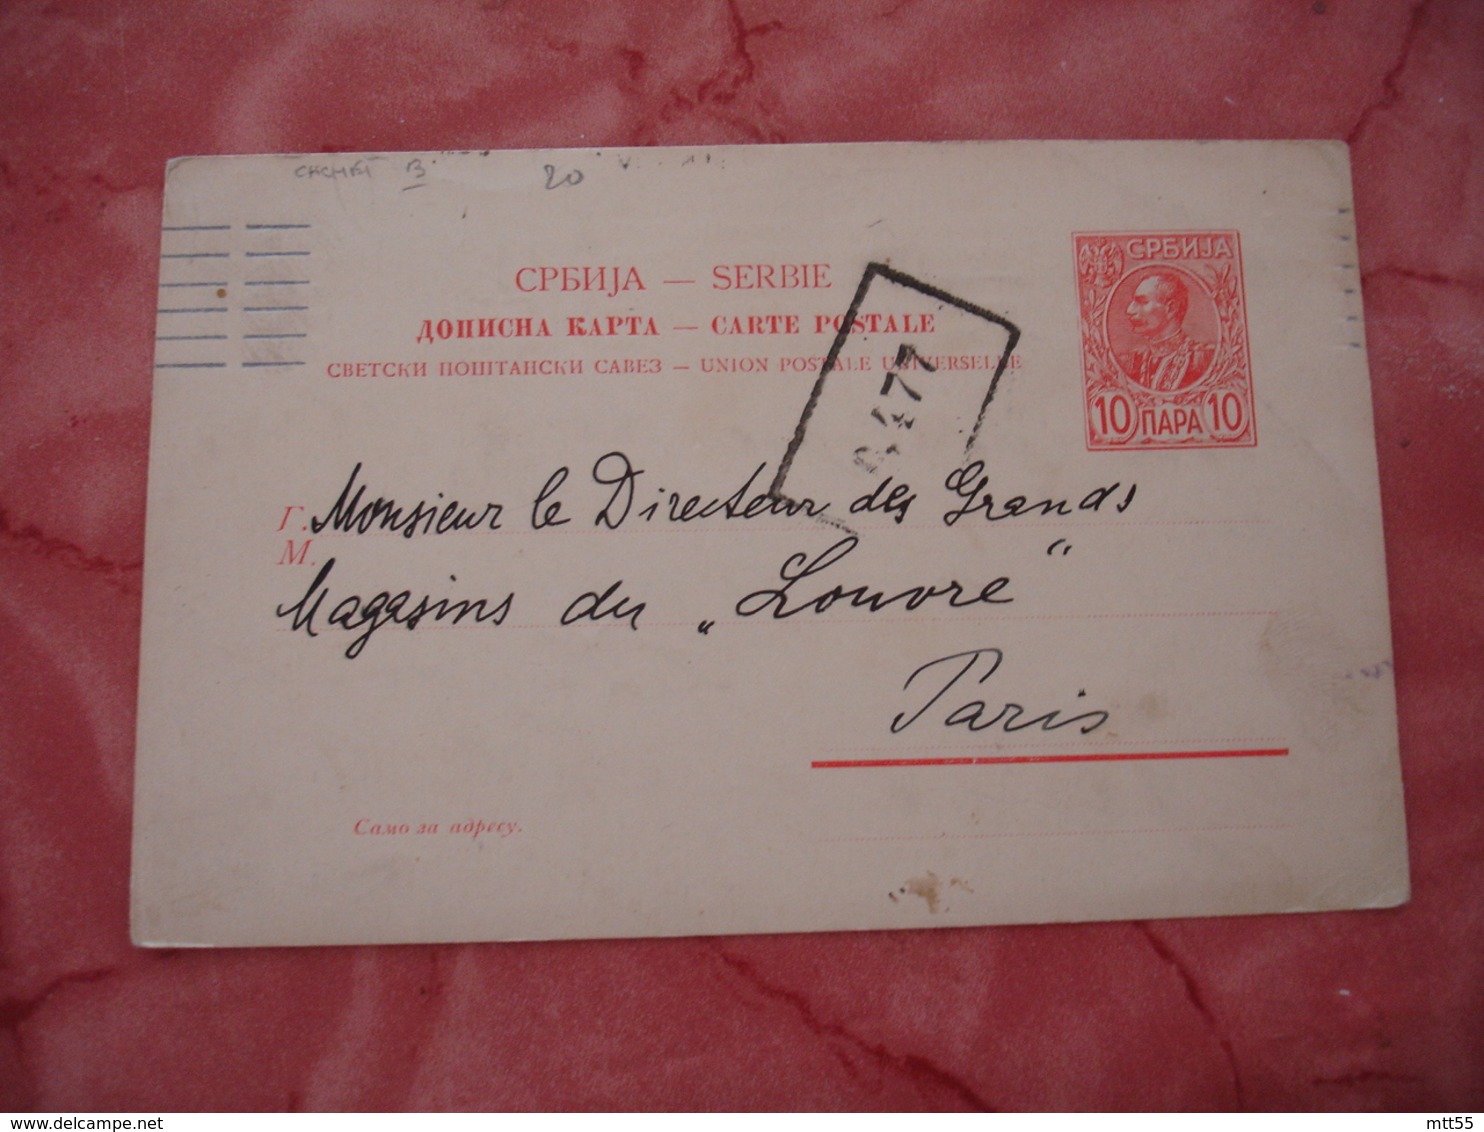 1914 Serbie  Belgrade  10 Napa Entier Postal Stationery Card Stationnery - Serbia